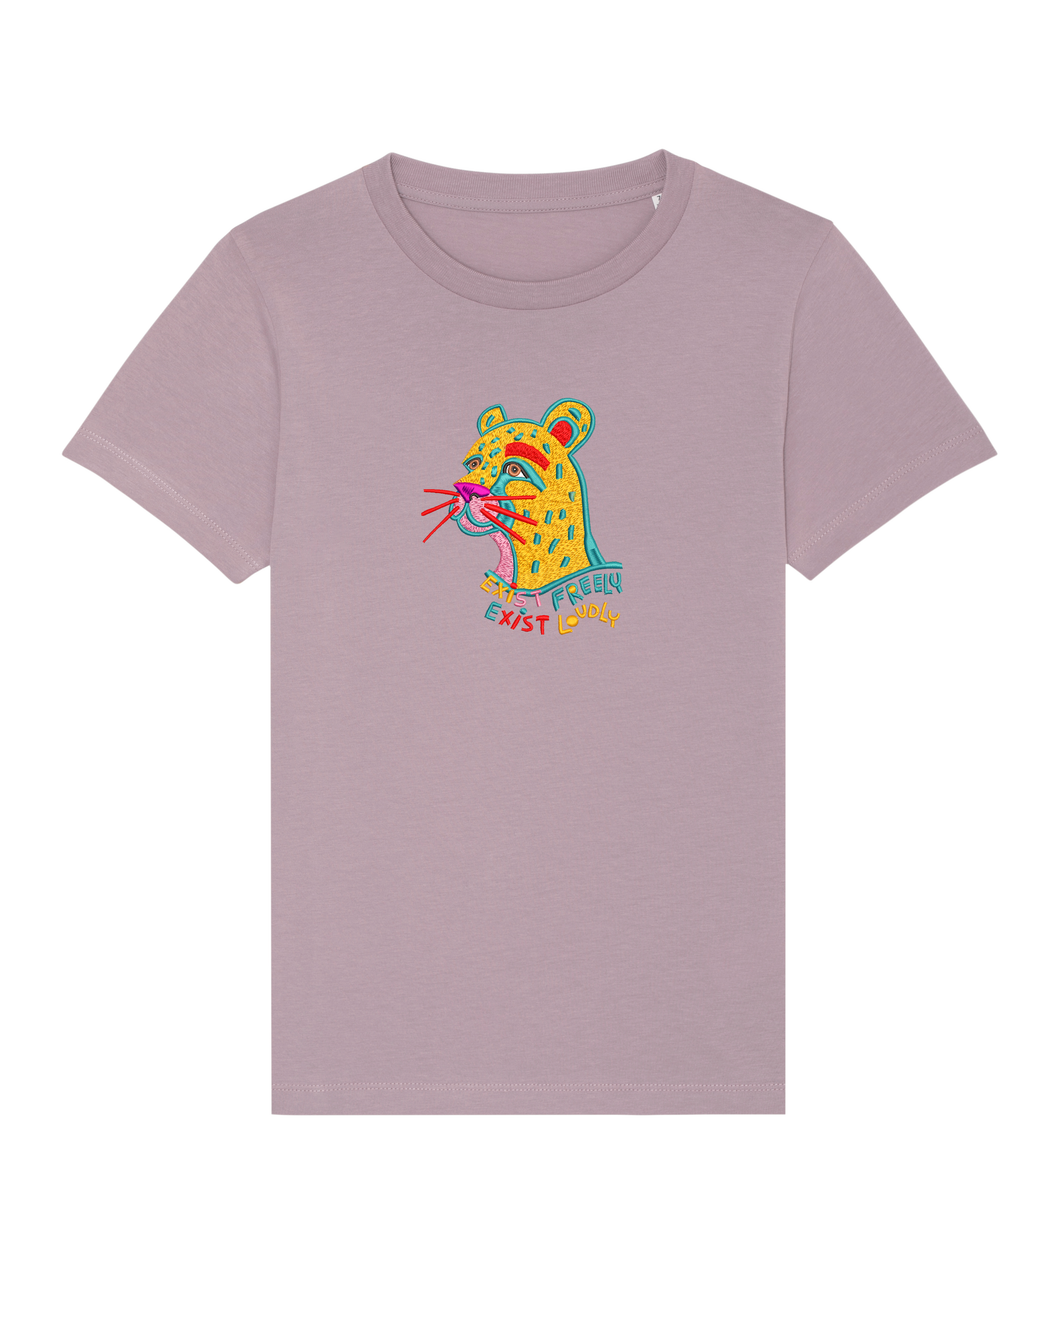 Cheetah - Embroidered kids tshirt